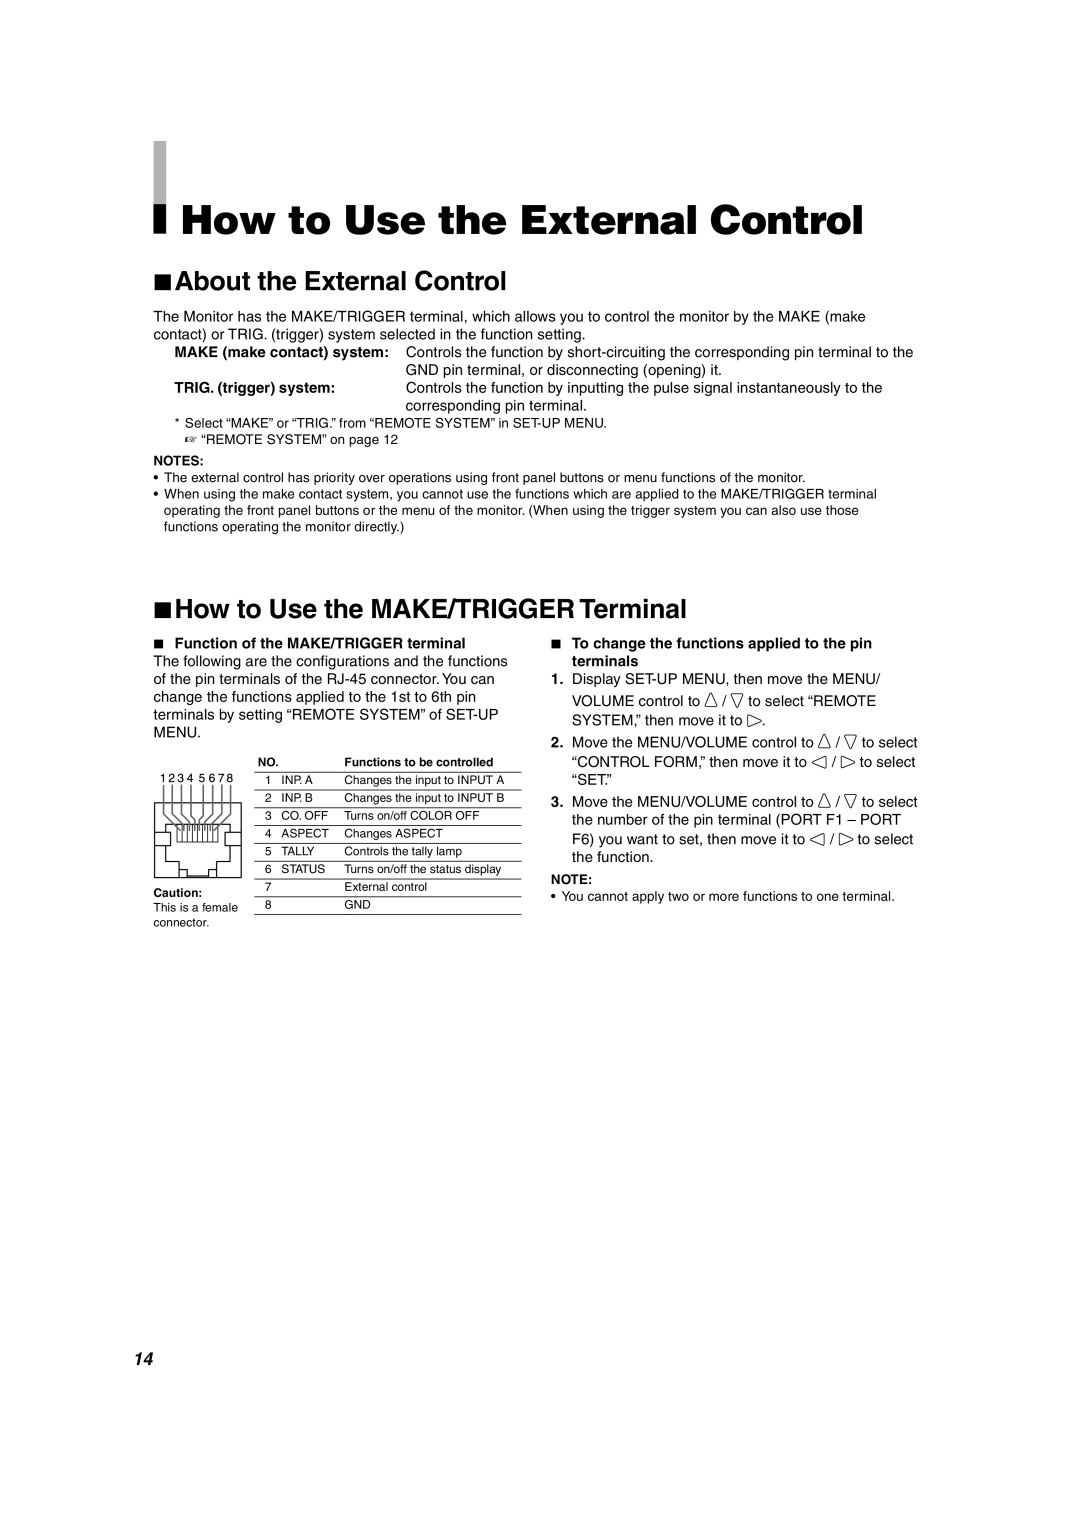 JVC TM-1011G manual How to Use the External Control, About the External Control, How to Use the MAKE/TRIGGER Terminal 